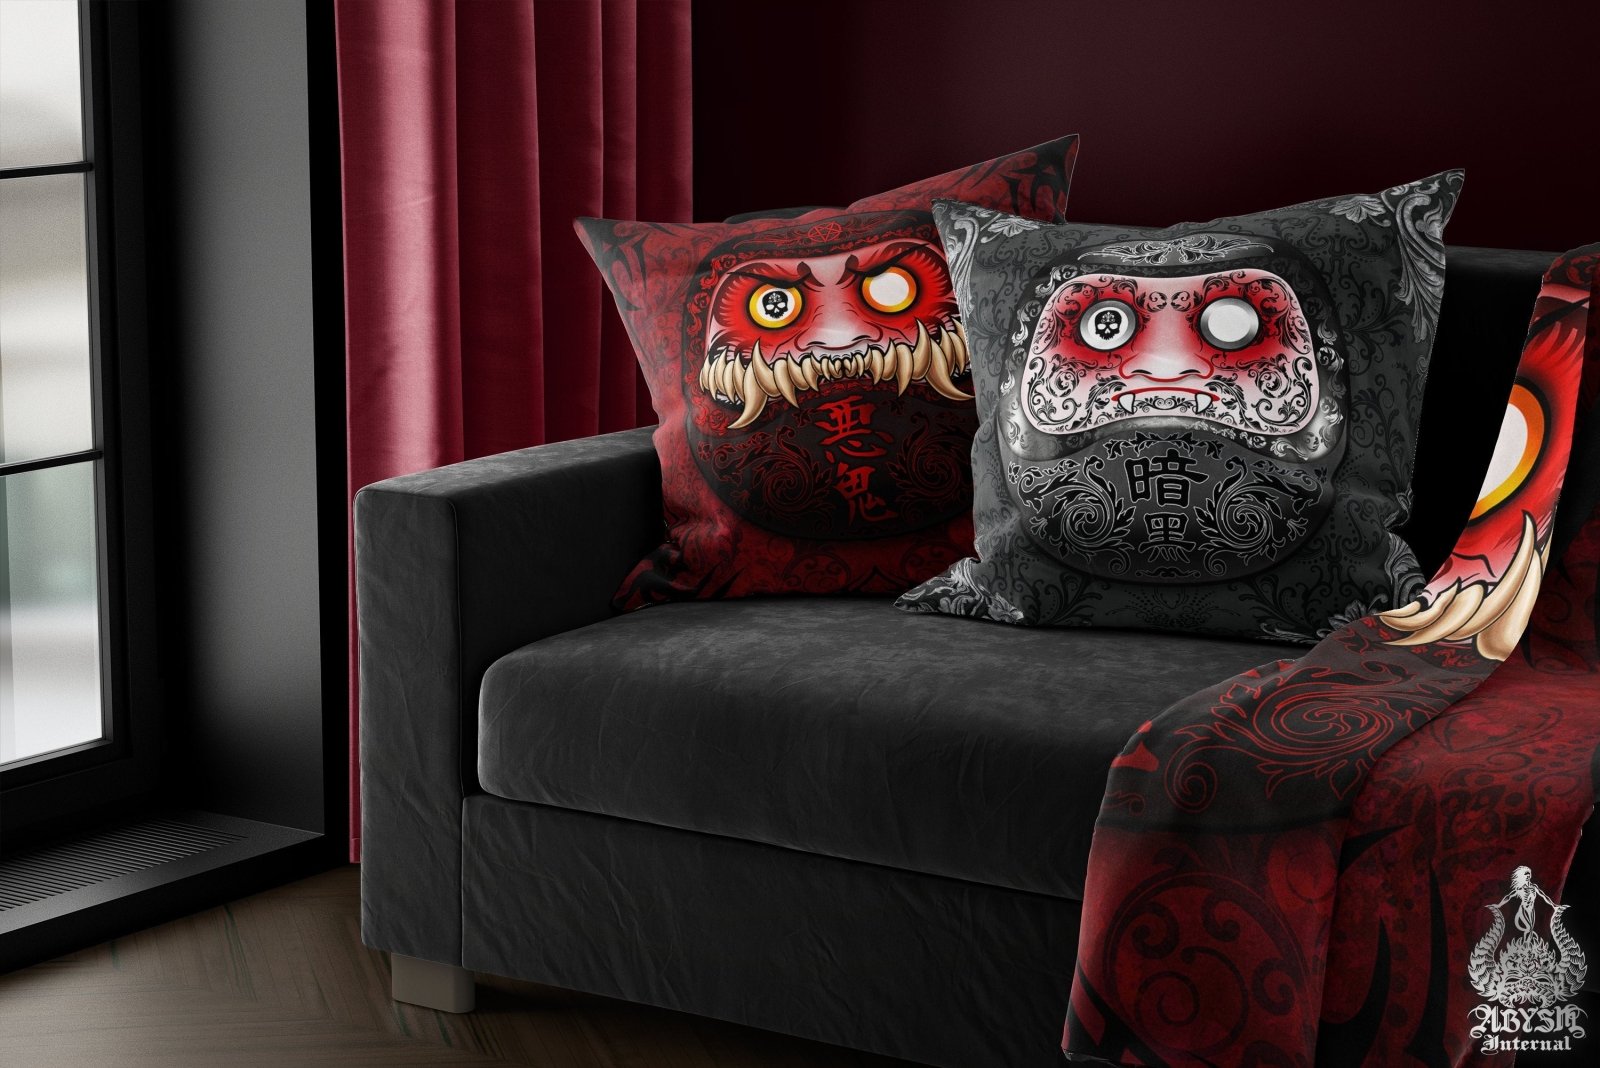 Demon Daruma Throw Pillow, Decorative Accent Cushion, Japanese Art, Alternative Home - Monster - Abysm Internal